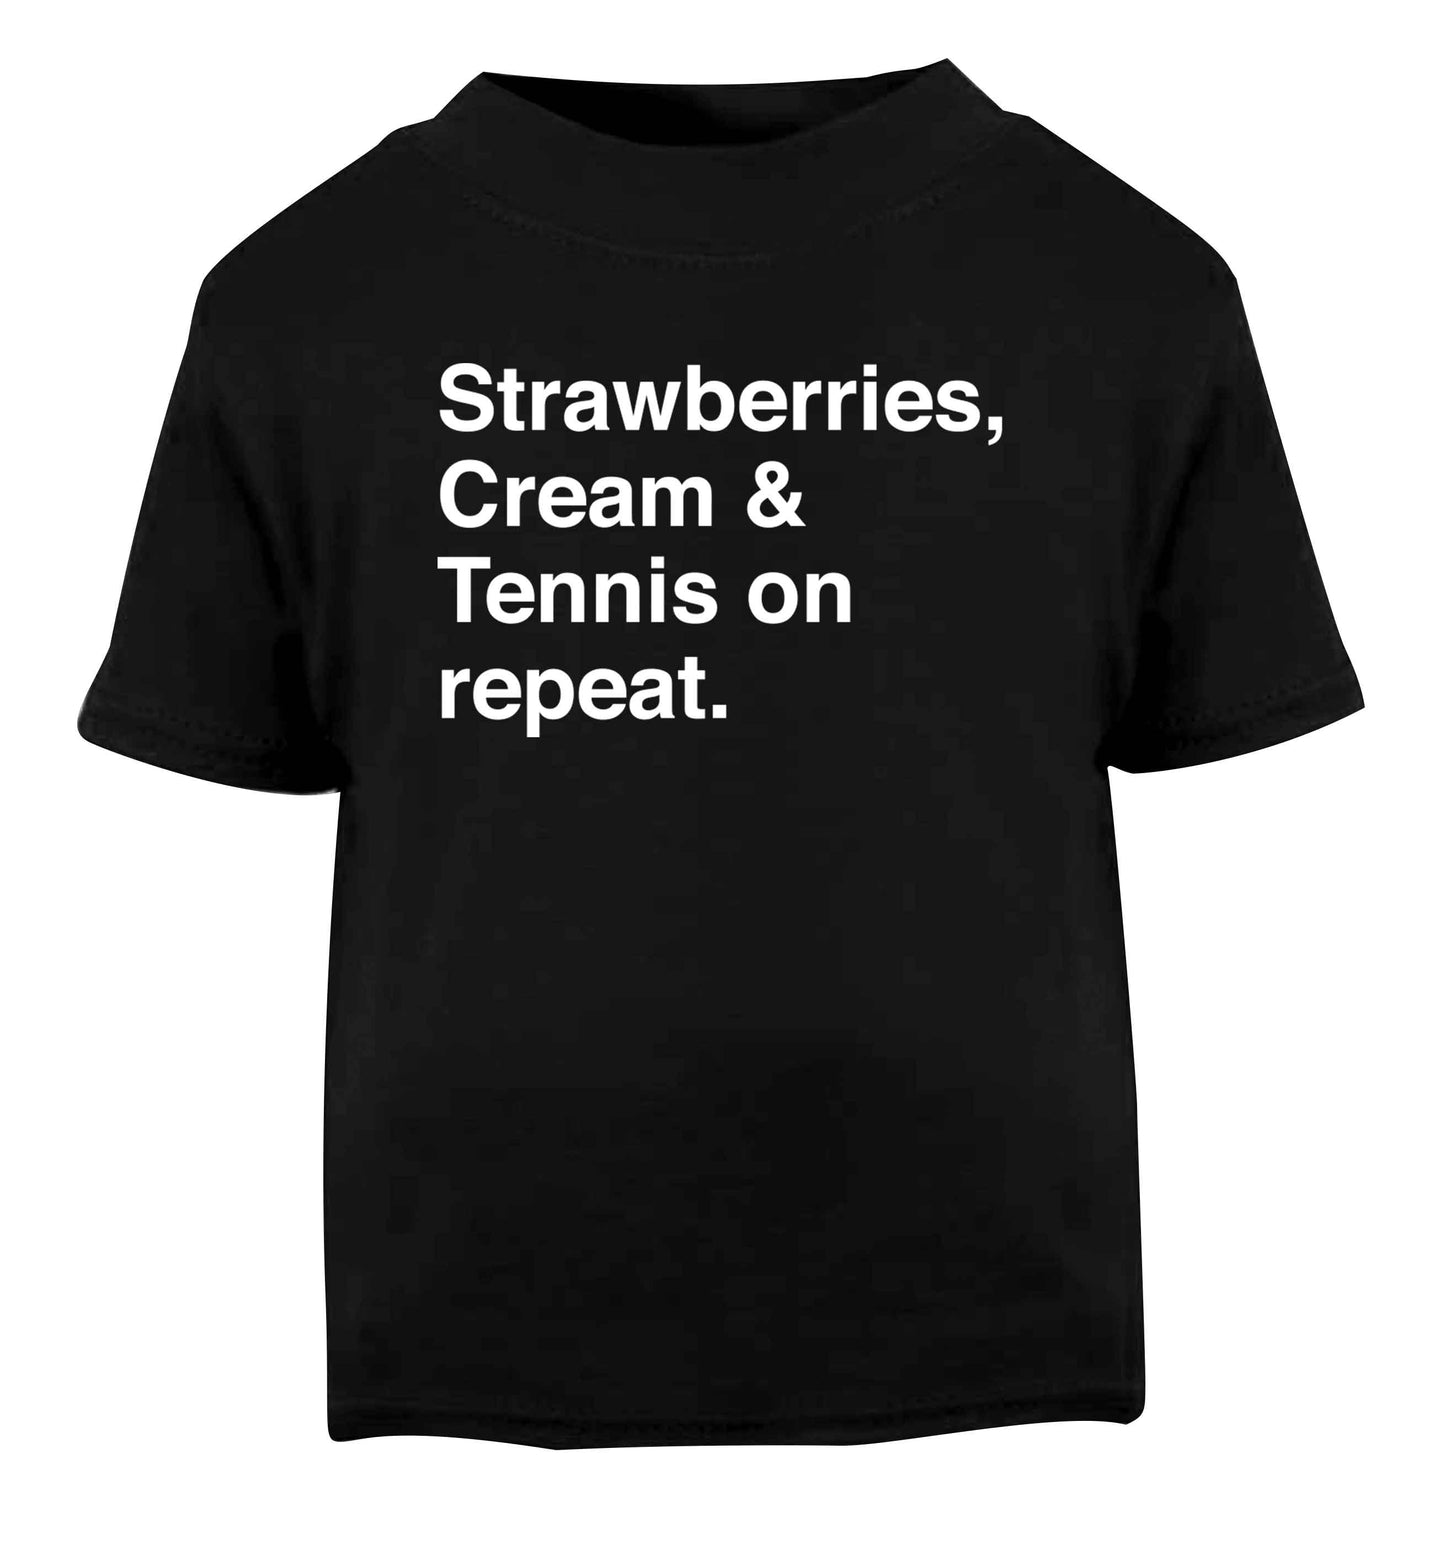 Strawberries, cream and tennis on repeat Black Baby Toddler Tshirt 2 years